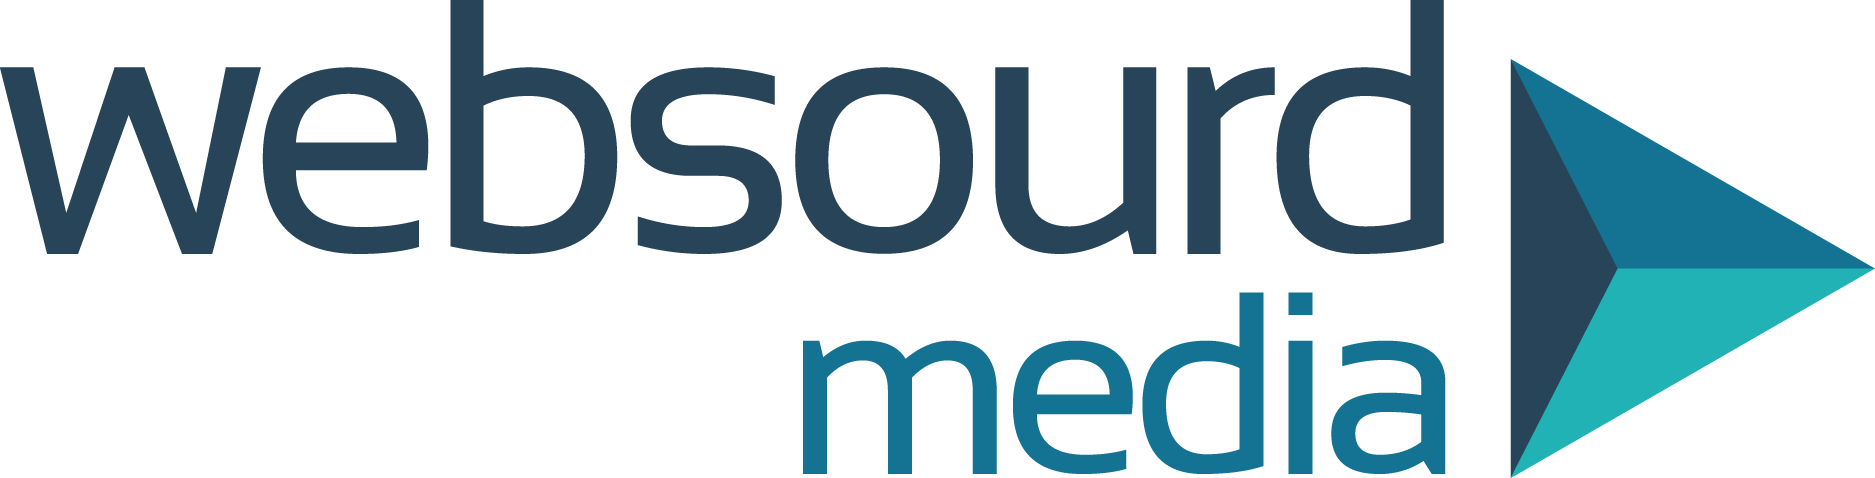 Websourd Media logo